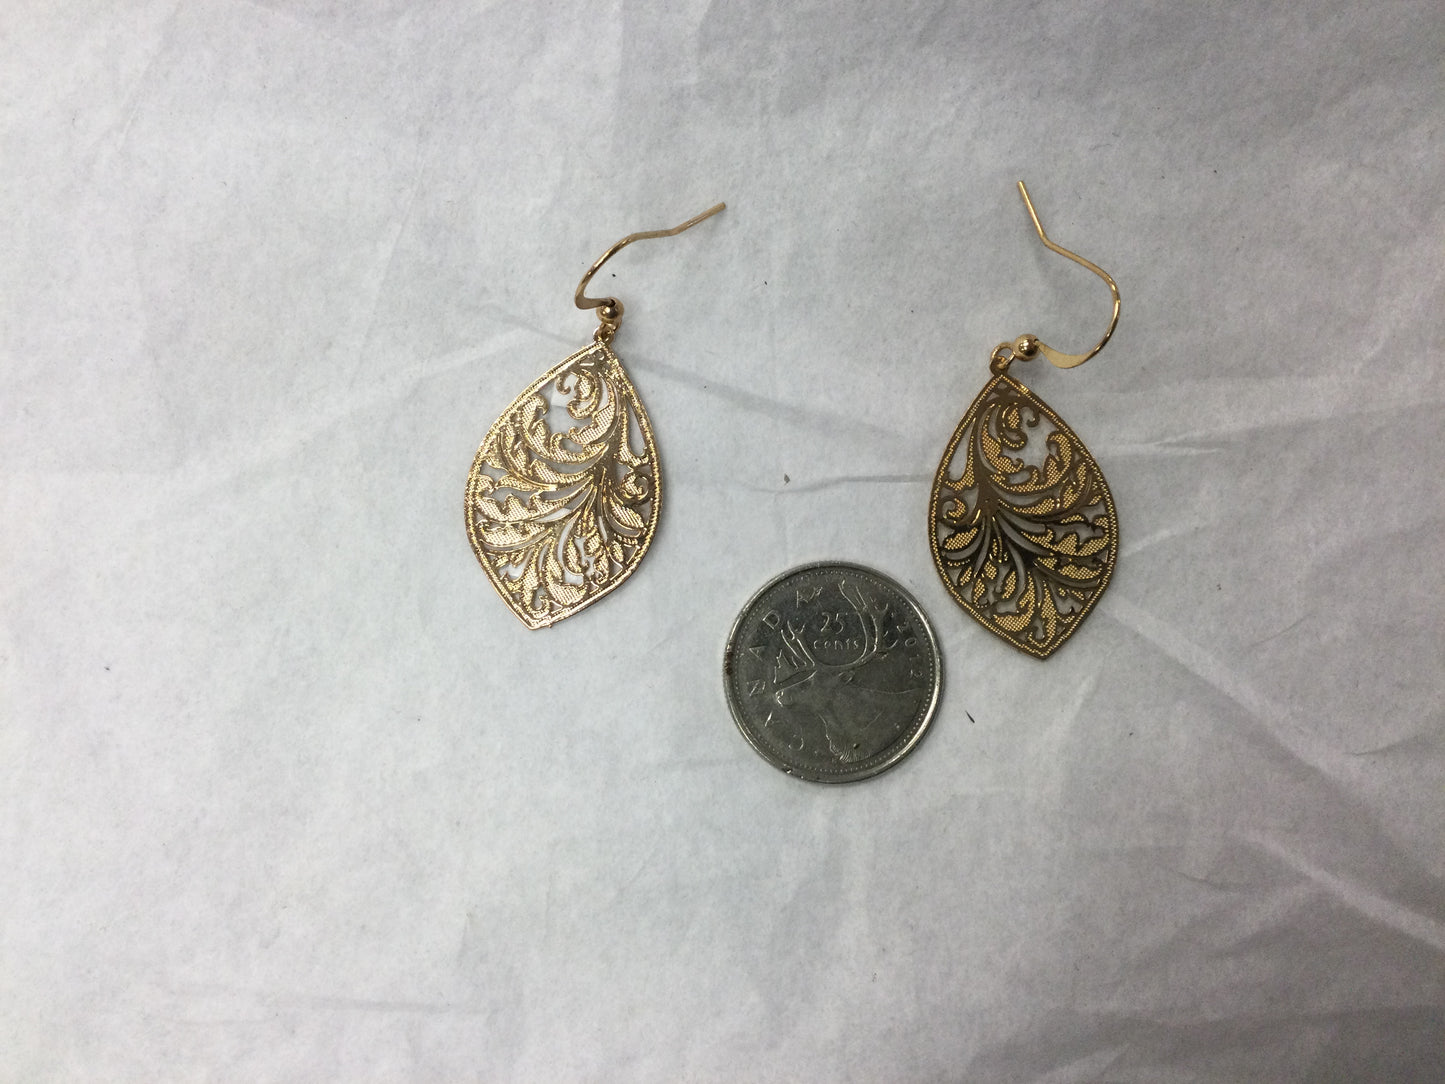 Lavishy earrings, leaf shape with leaf design